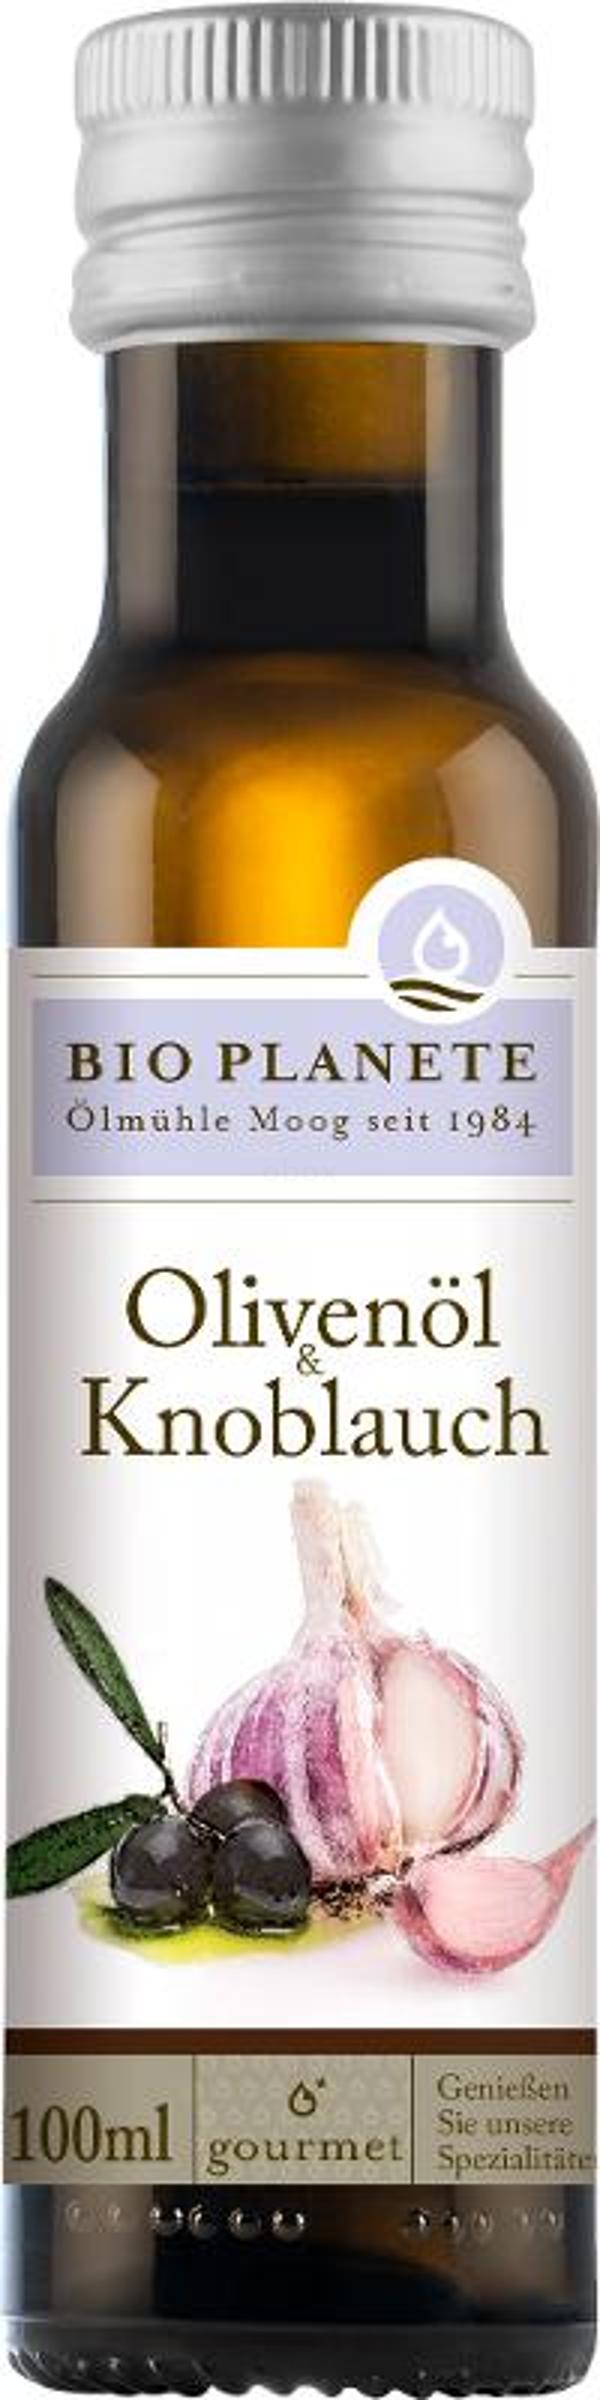 Produktfoto zu Olivengewürzöl mit Knoblauch